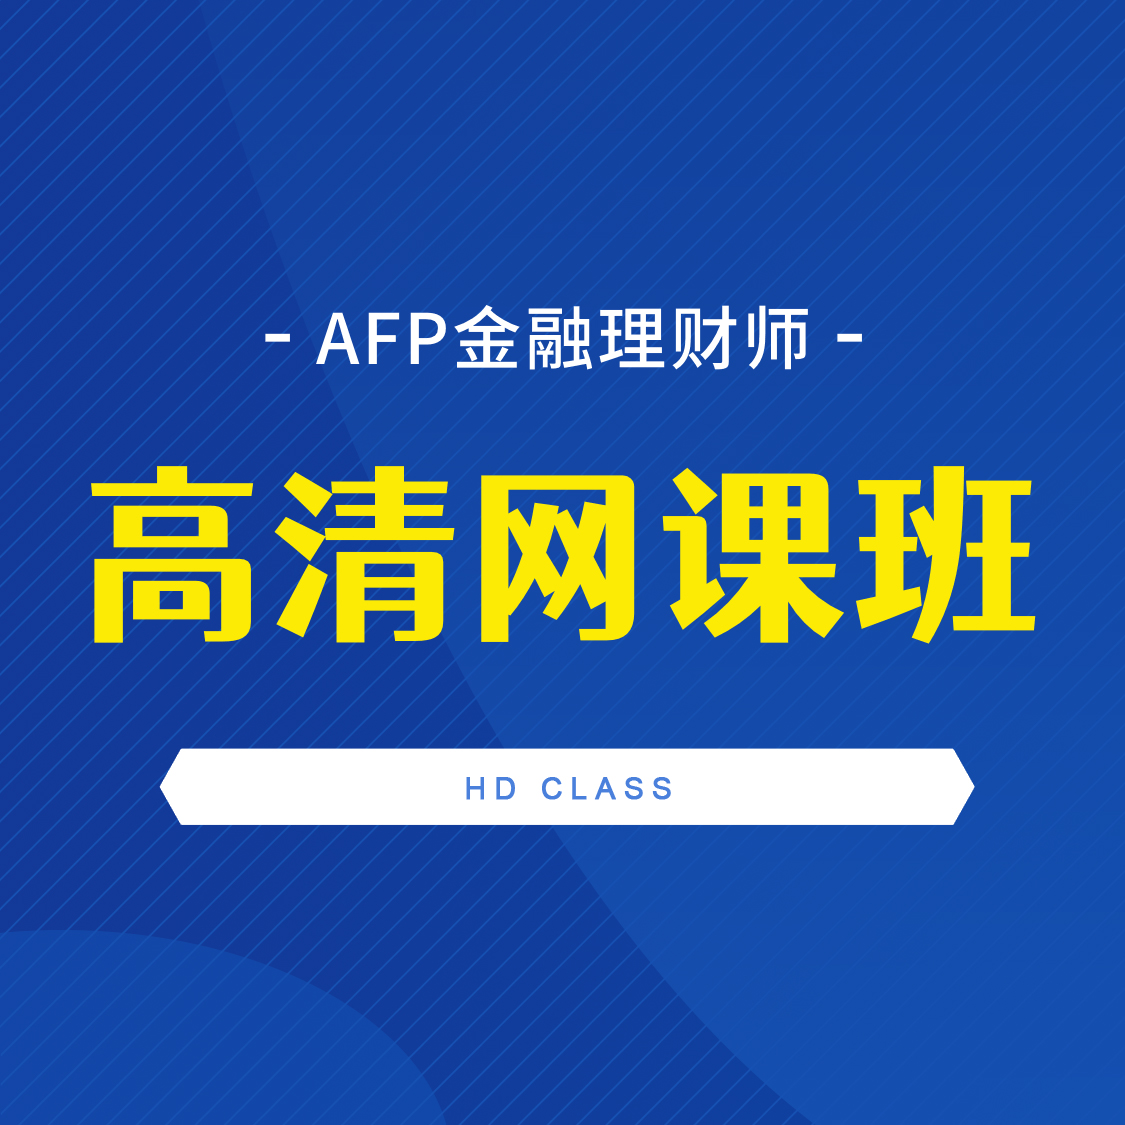 AFP高清网课班